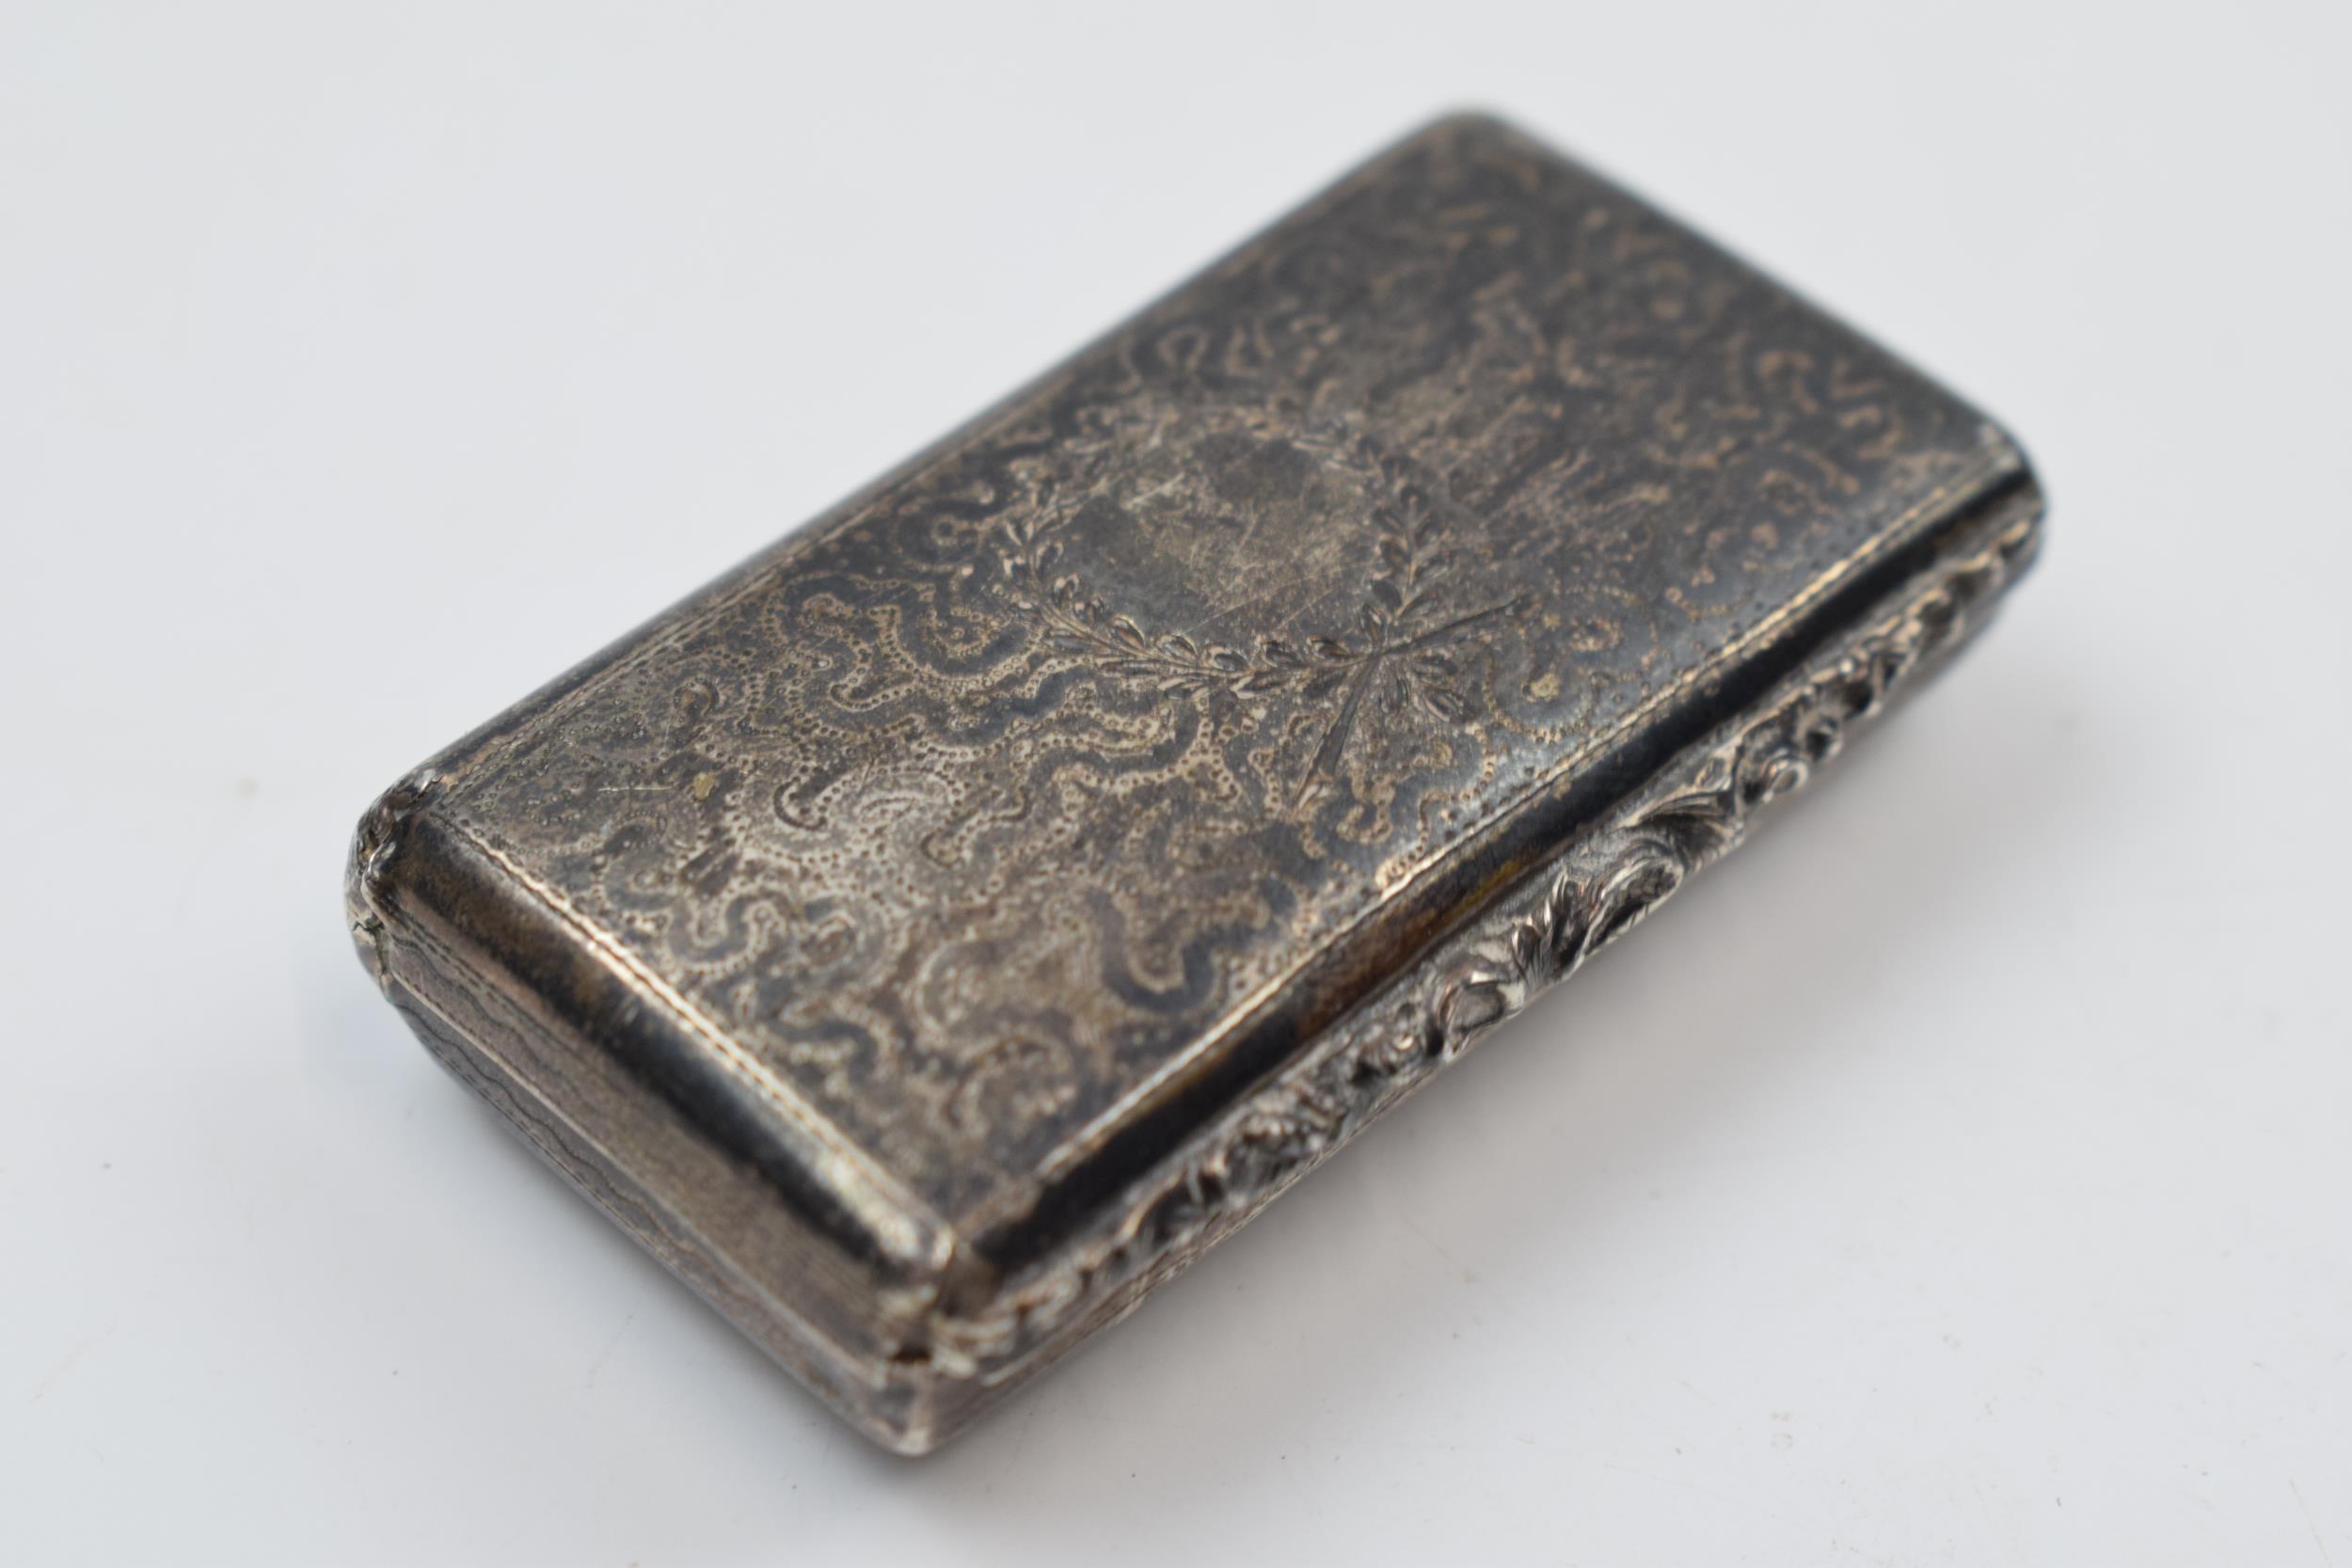 Georgian silver snuff box with raised thumb piece, Birmingham 1833, 21.3 grams.